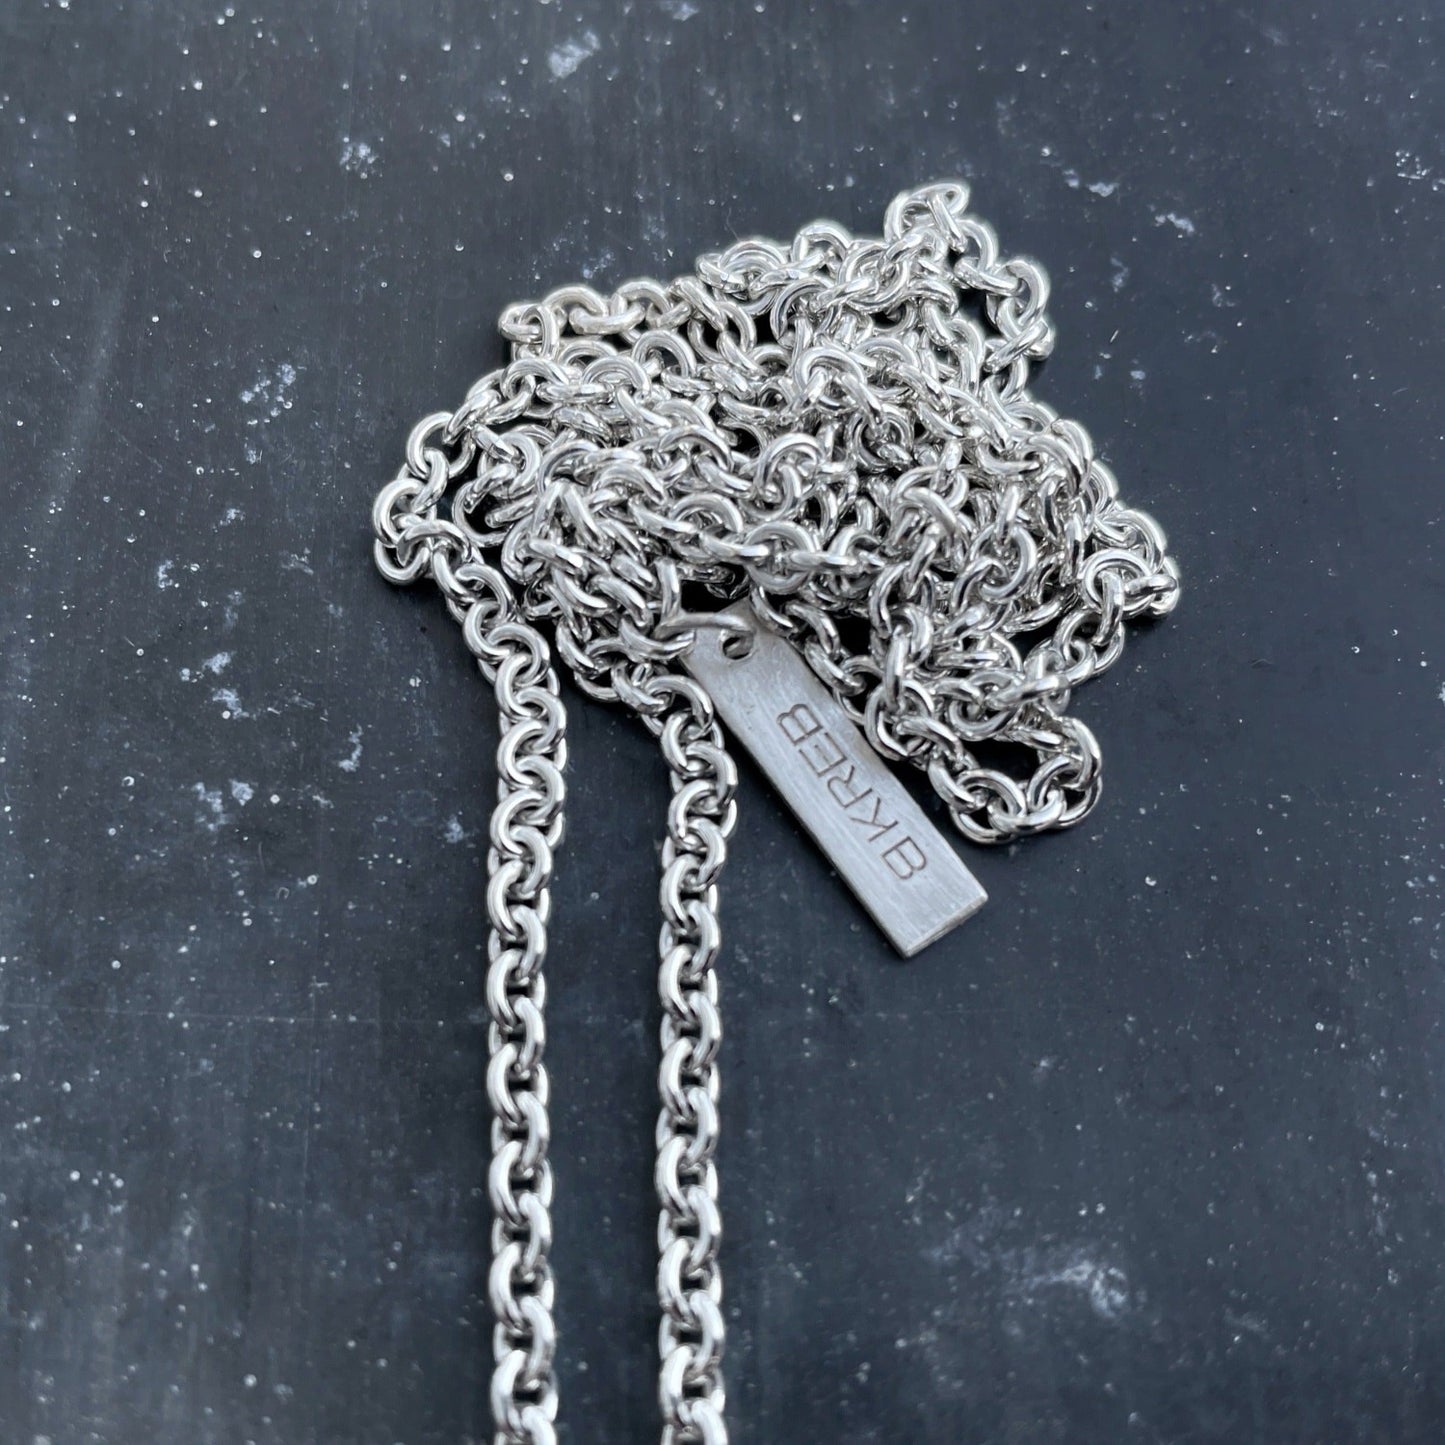 Dub STN necklace - long